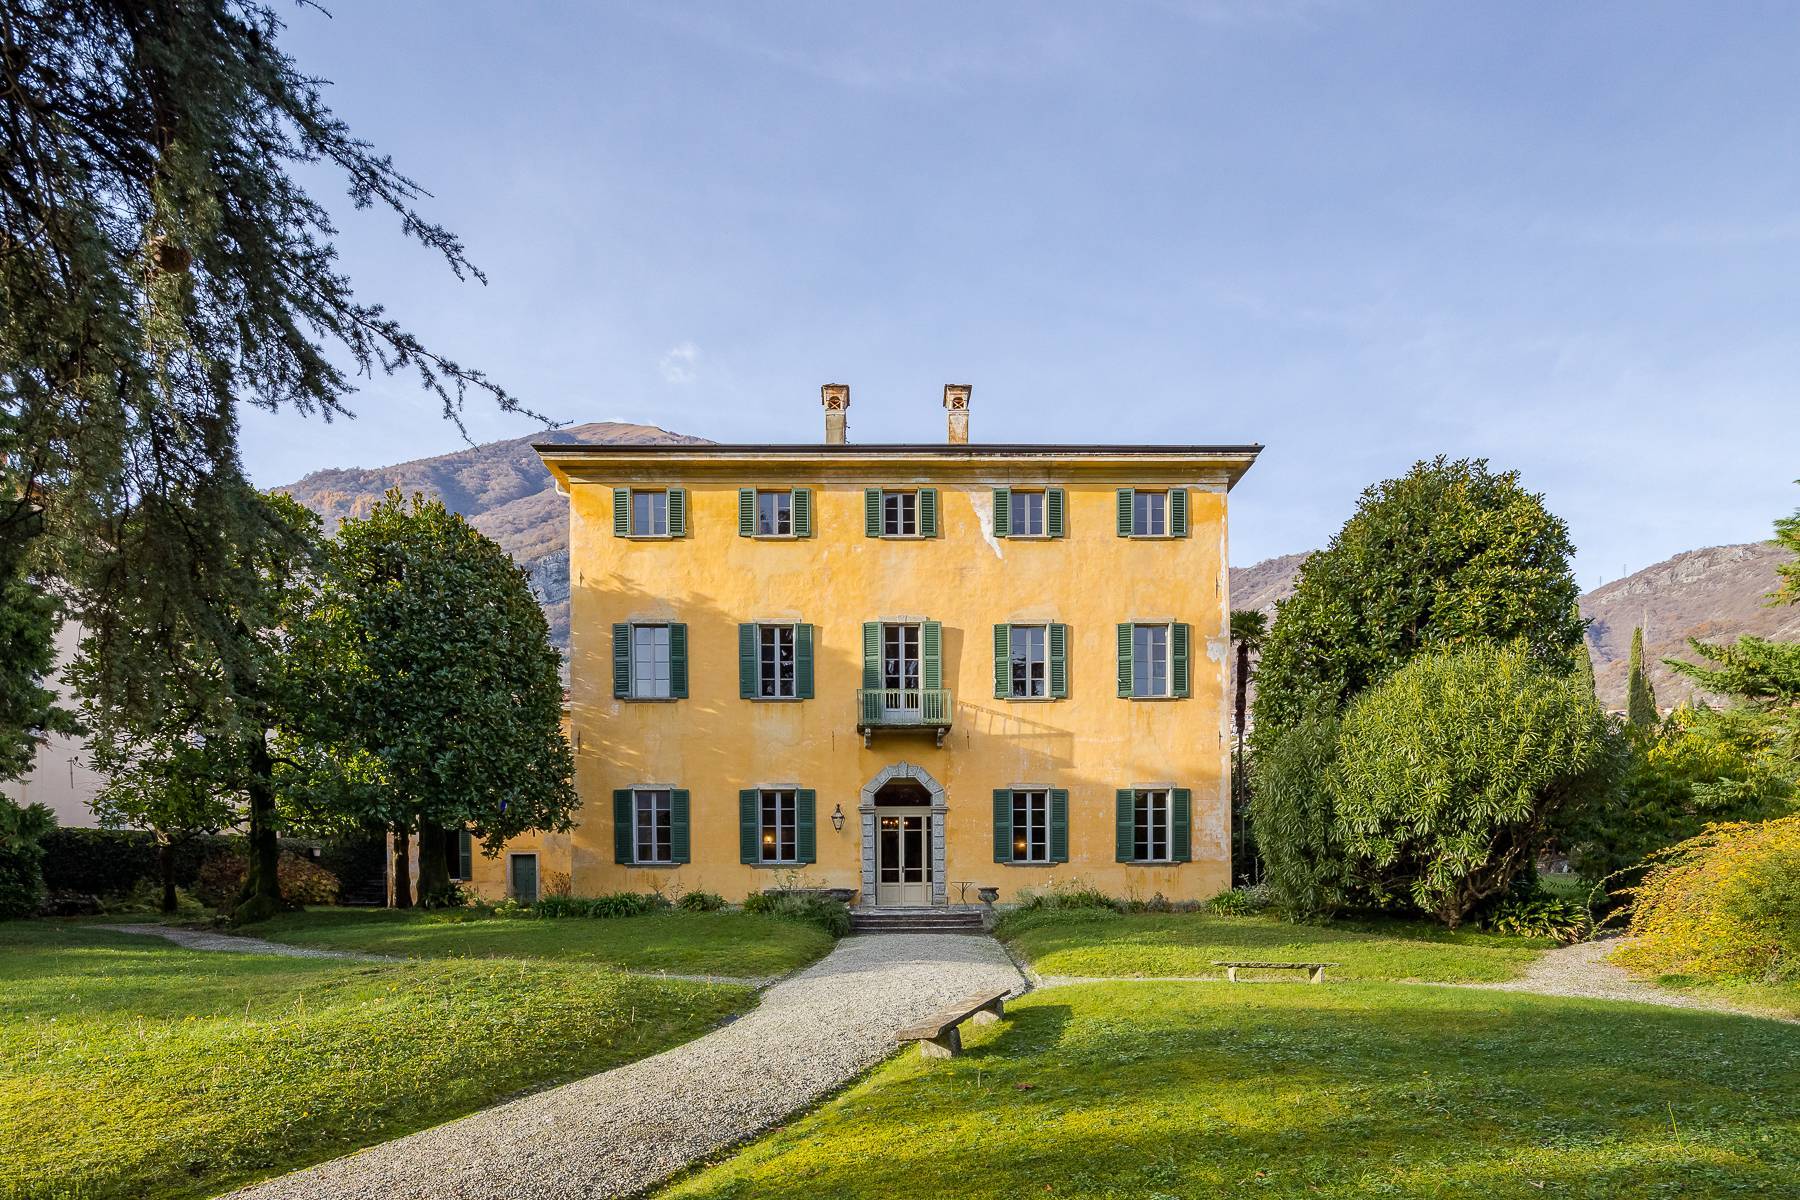 Tremezzina - Outstanding eighteenth-century villa surrounded by greenery